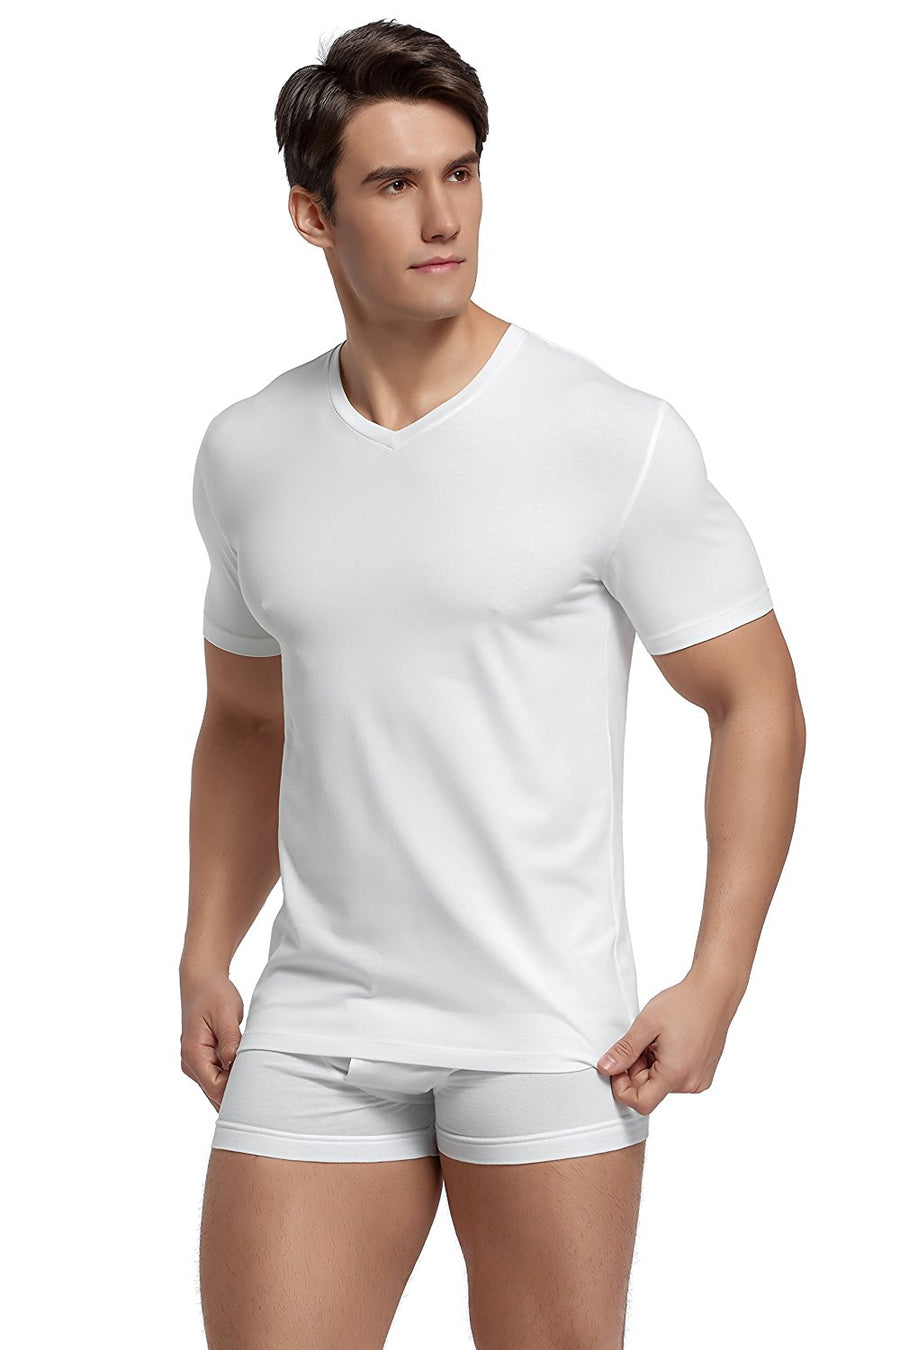 CYZ Mens Cotton Stretch V-Neck Fitted T-Shirt 2-PK